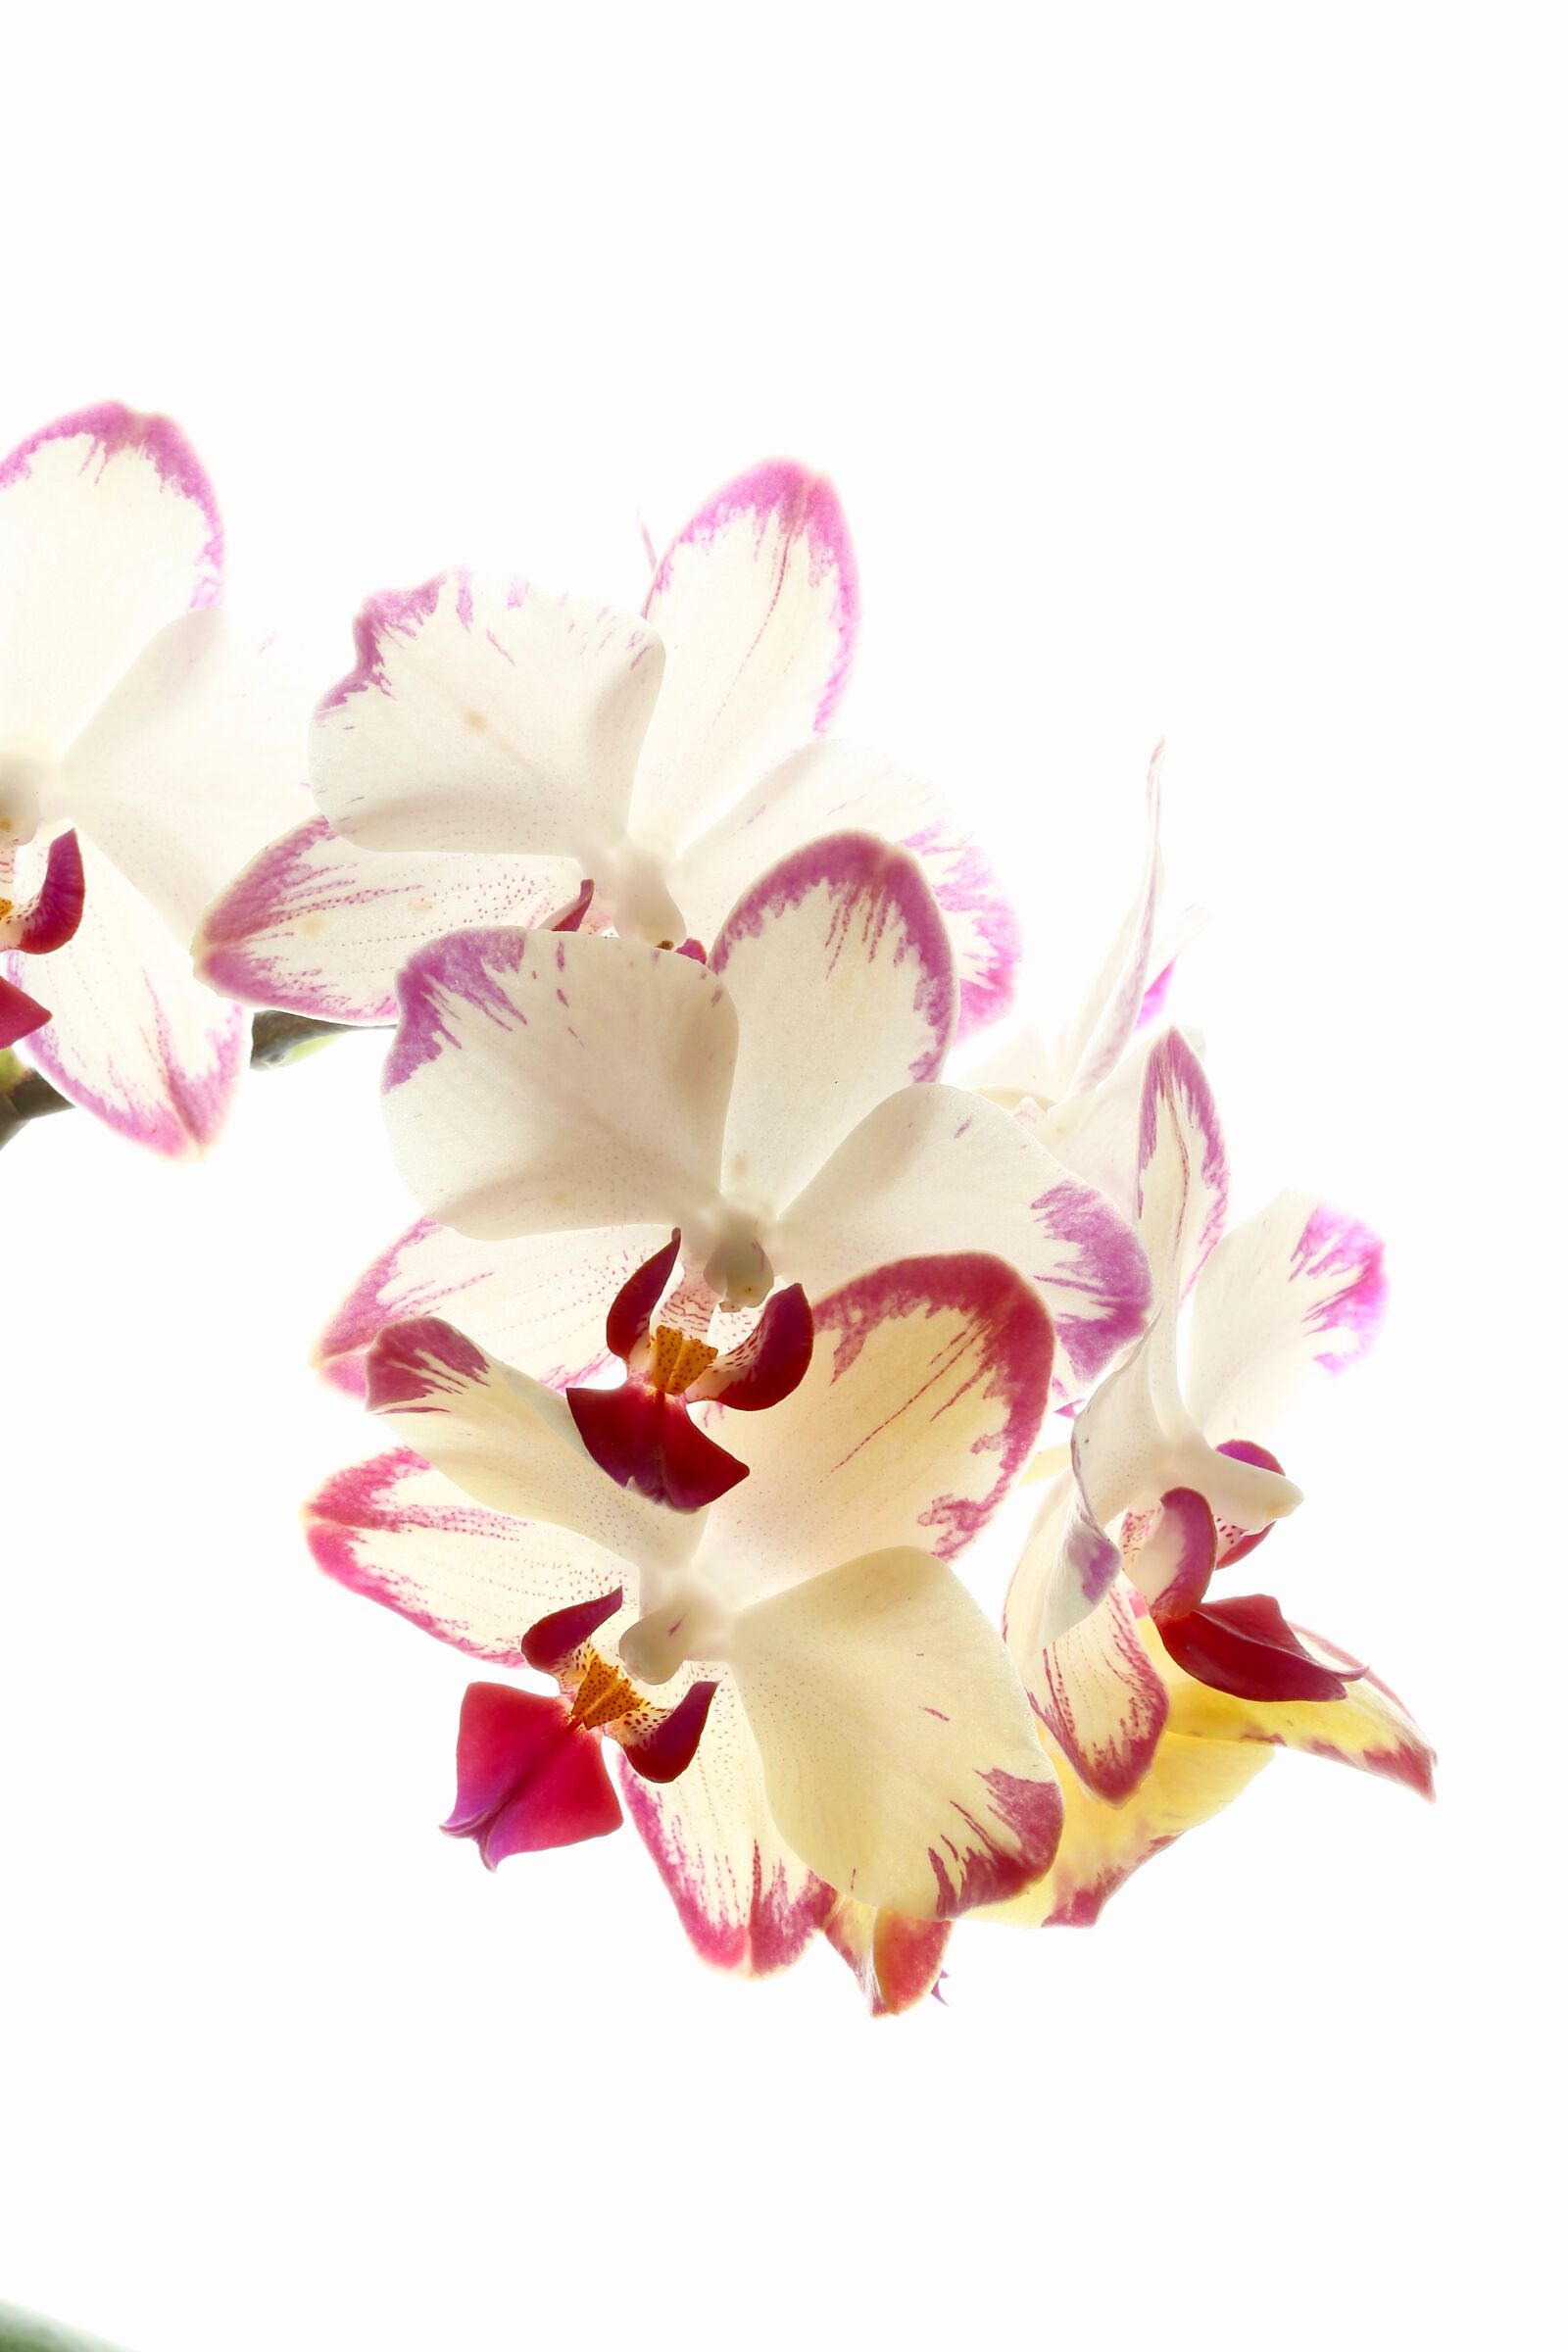 2.Orchids...